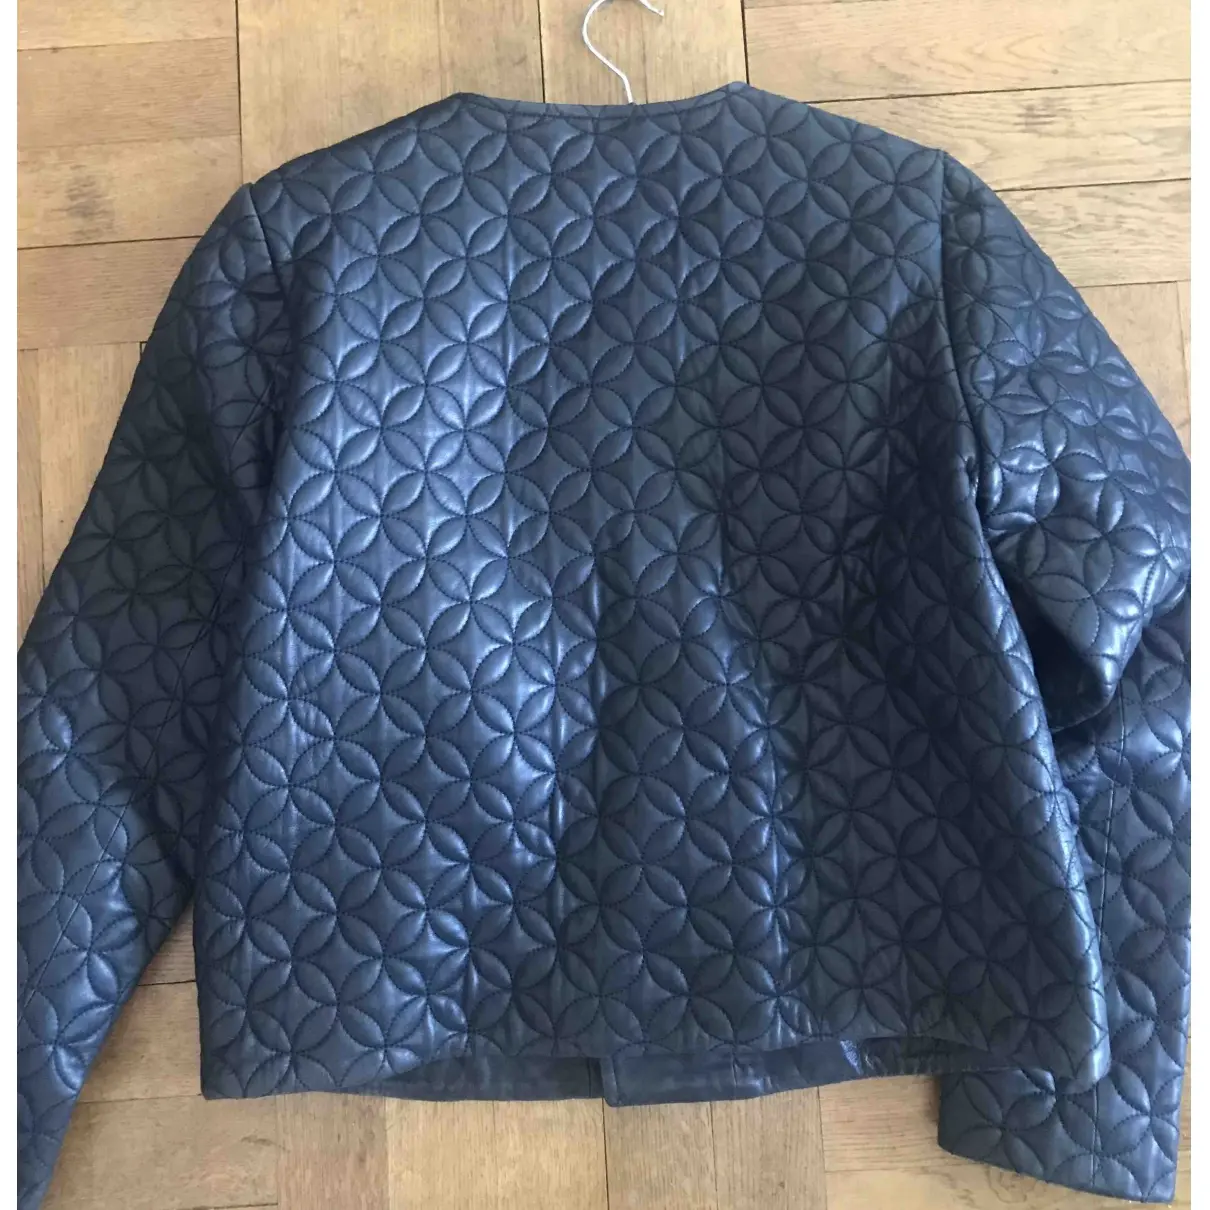 Manoush Leather jacket for sale